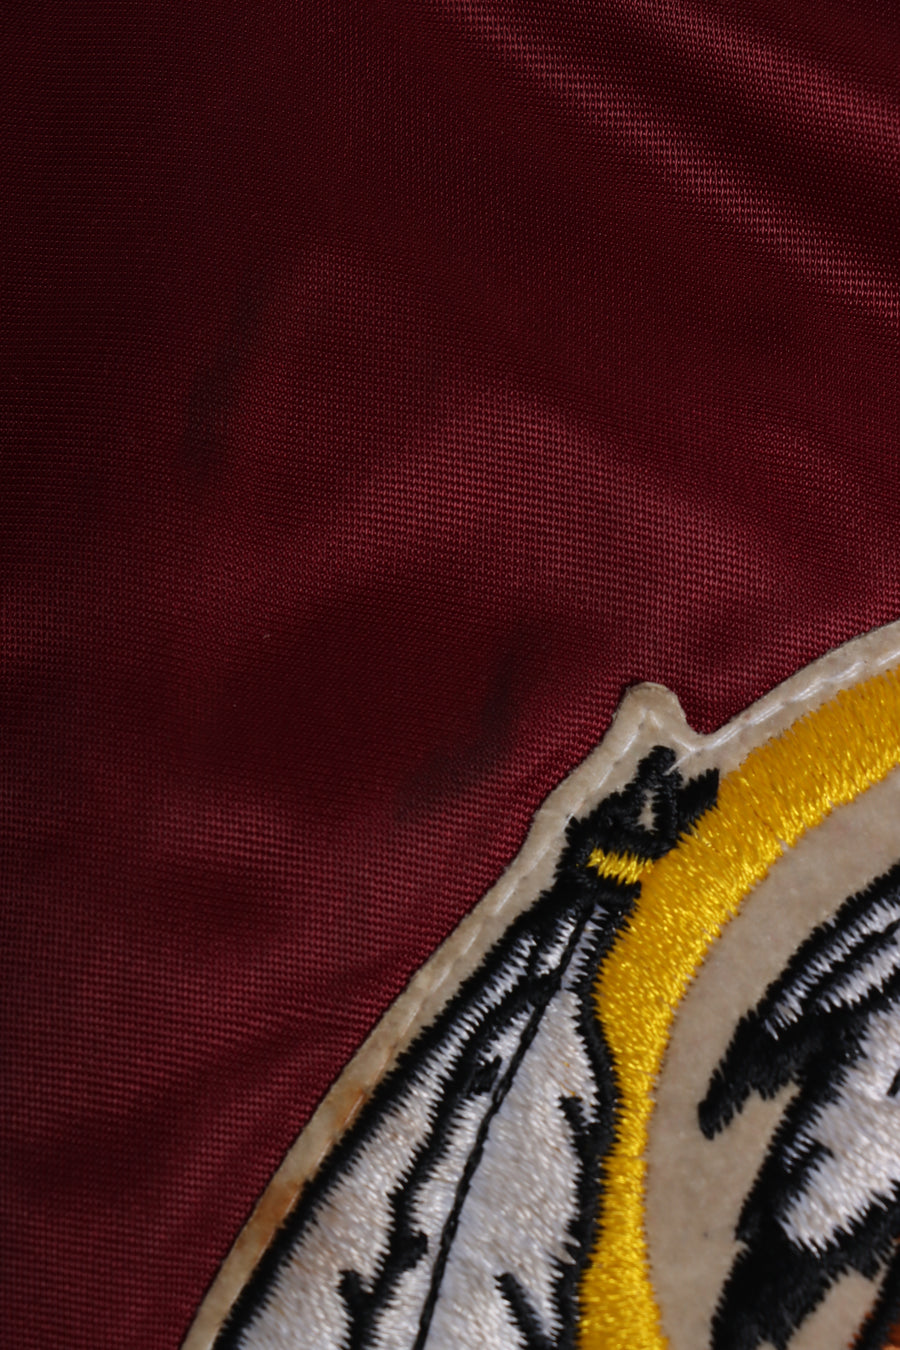 Washington Redskins Embroidered Satin Jacket (L-XL)